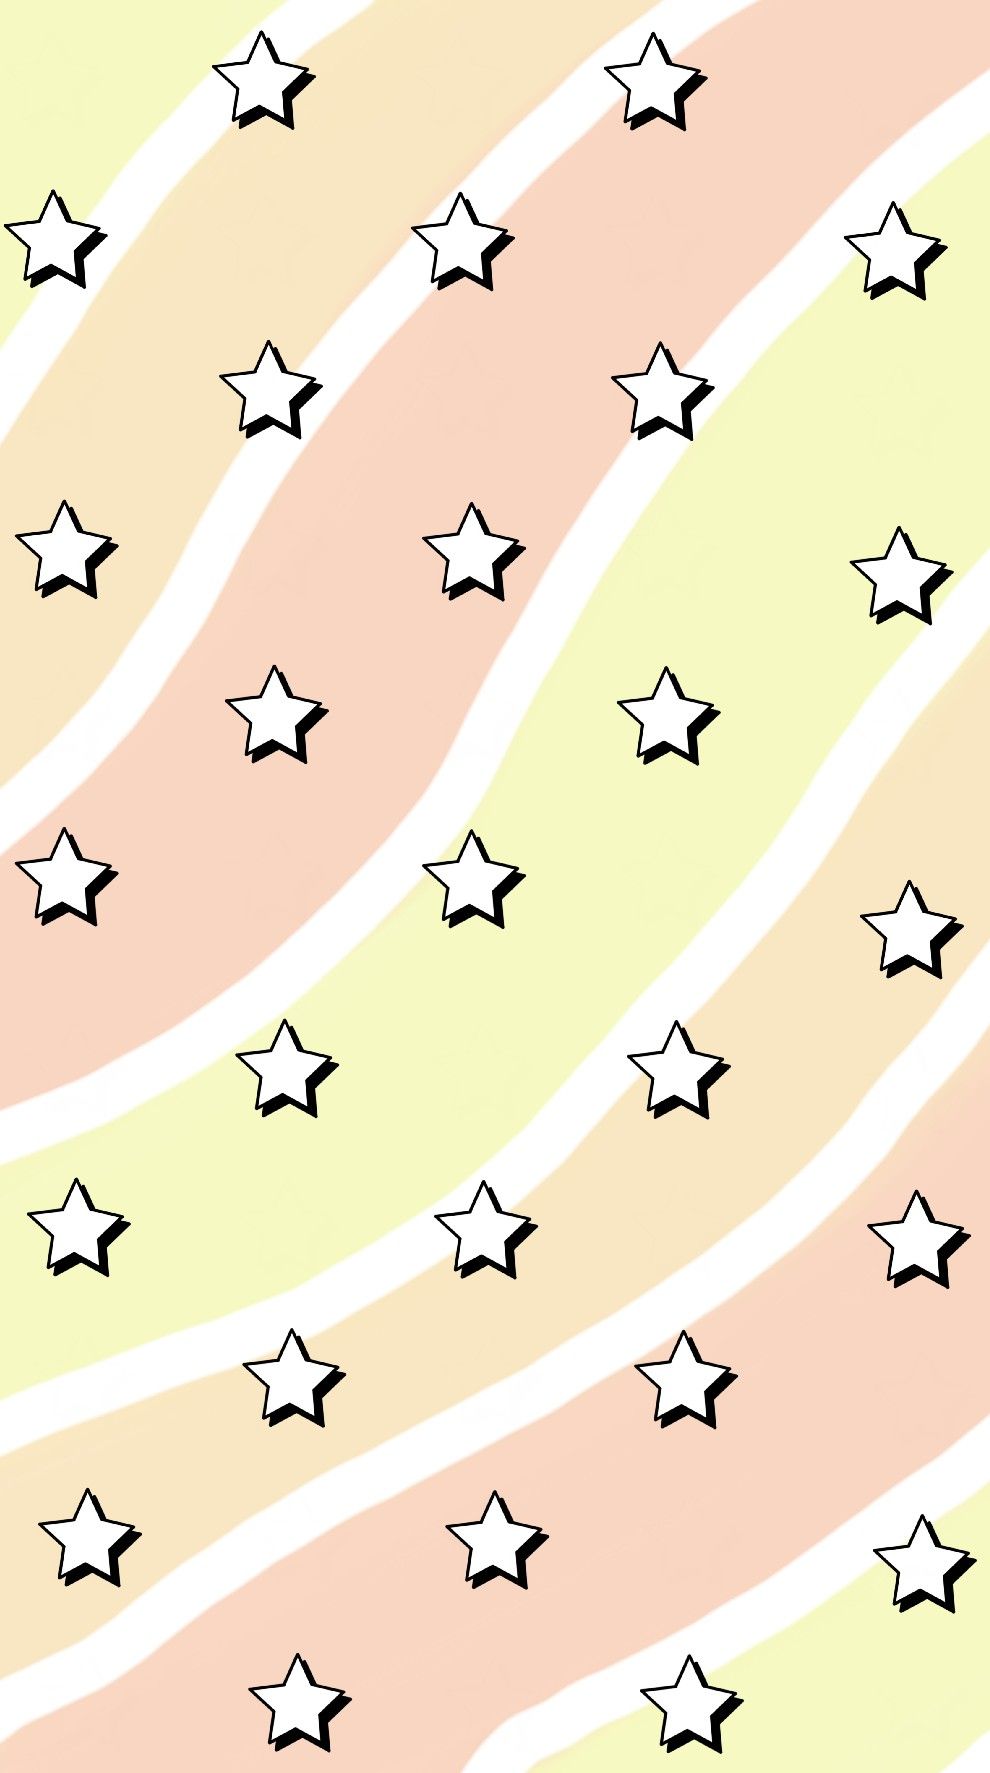  Sterne Hintergrundbild 990x1773. Aesthetic star wallpaper. This image has copyright. Galeri duvarı, Komik duvar kağıtları, Duvar kağıtları